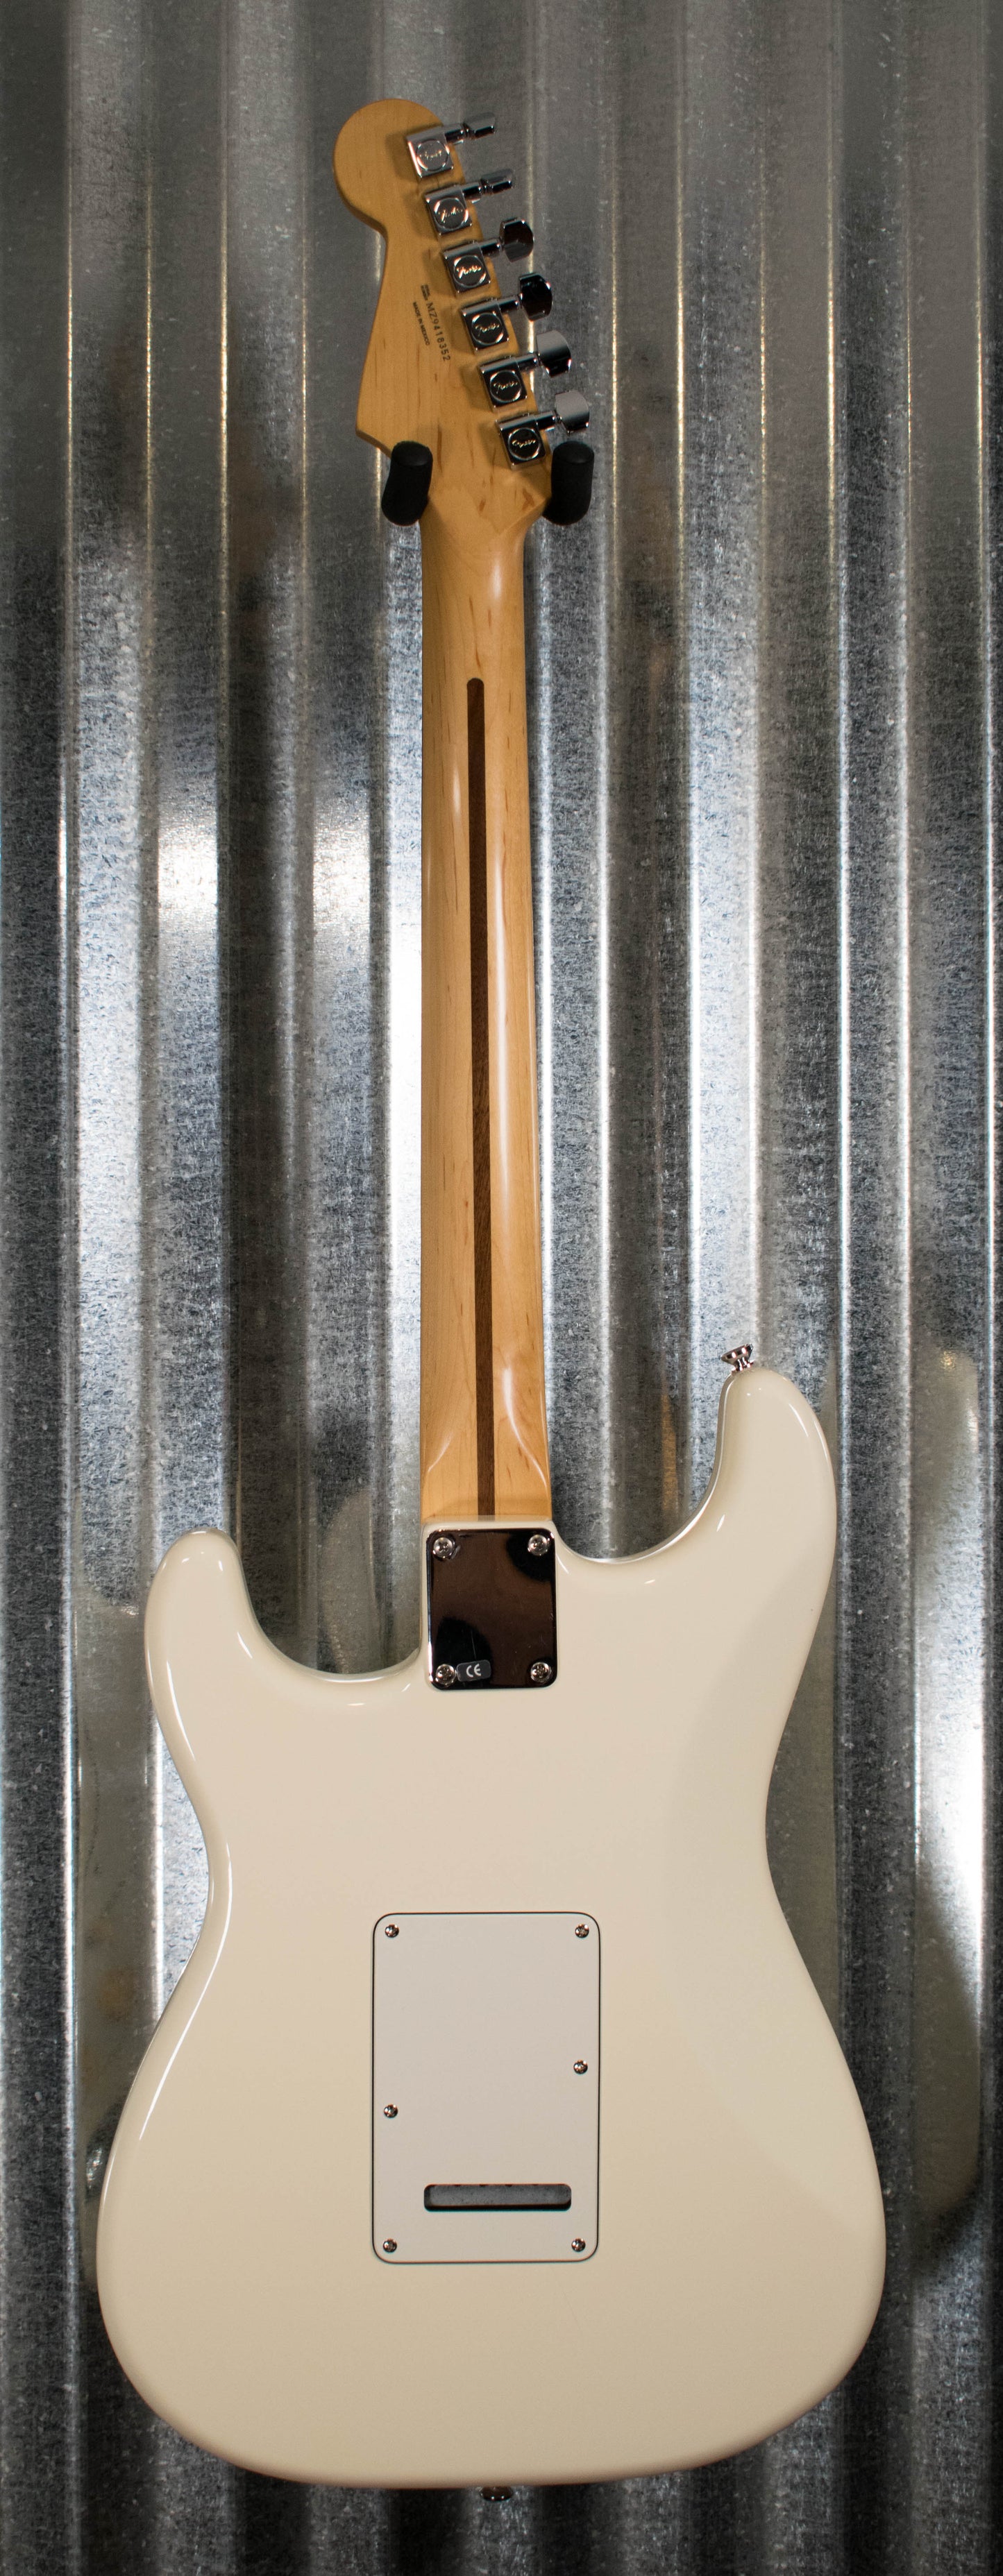 Fender MIM Standard Stratocaster Olympic White Guitar & Upgrades & Bag #8352 Used